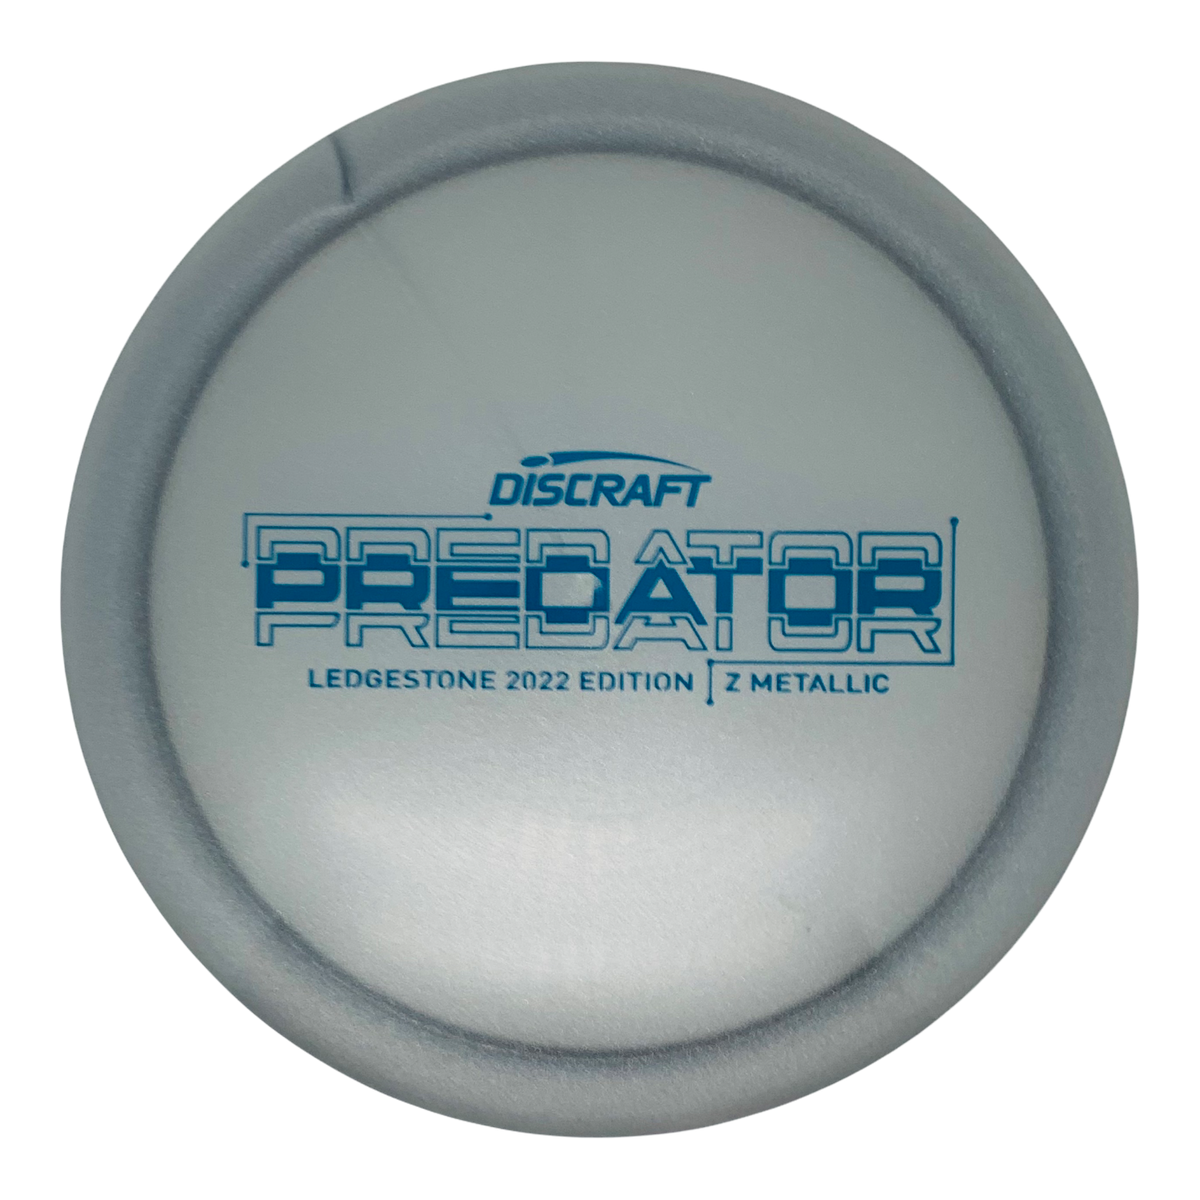 Discraft Z Metallic Predator - Ledgestone 2